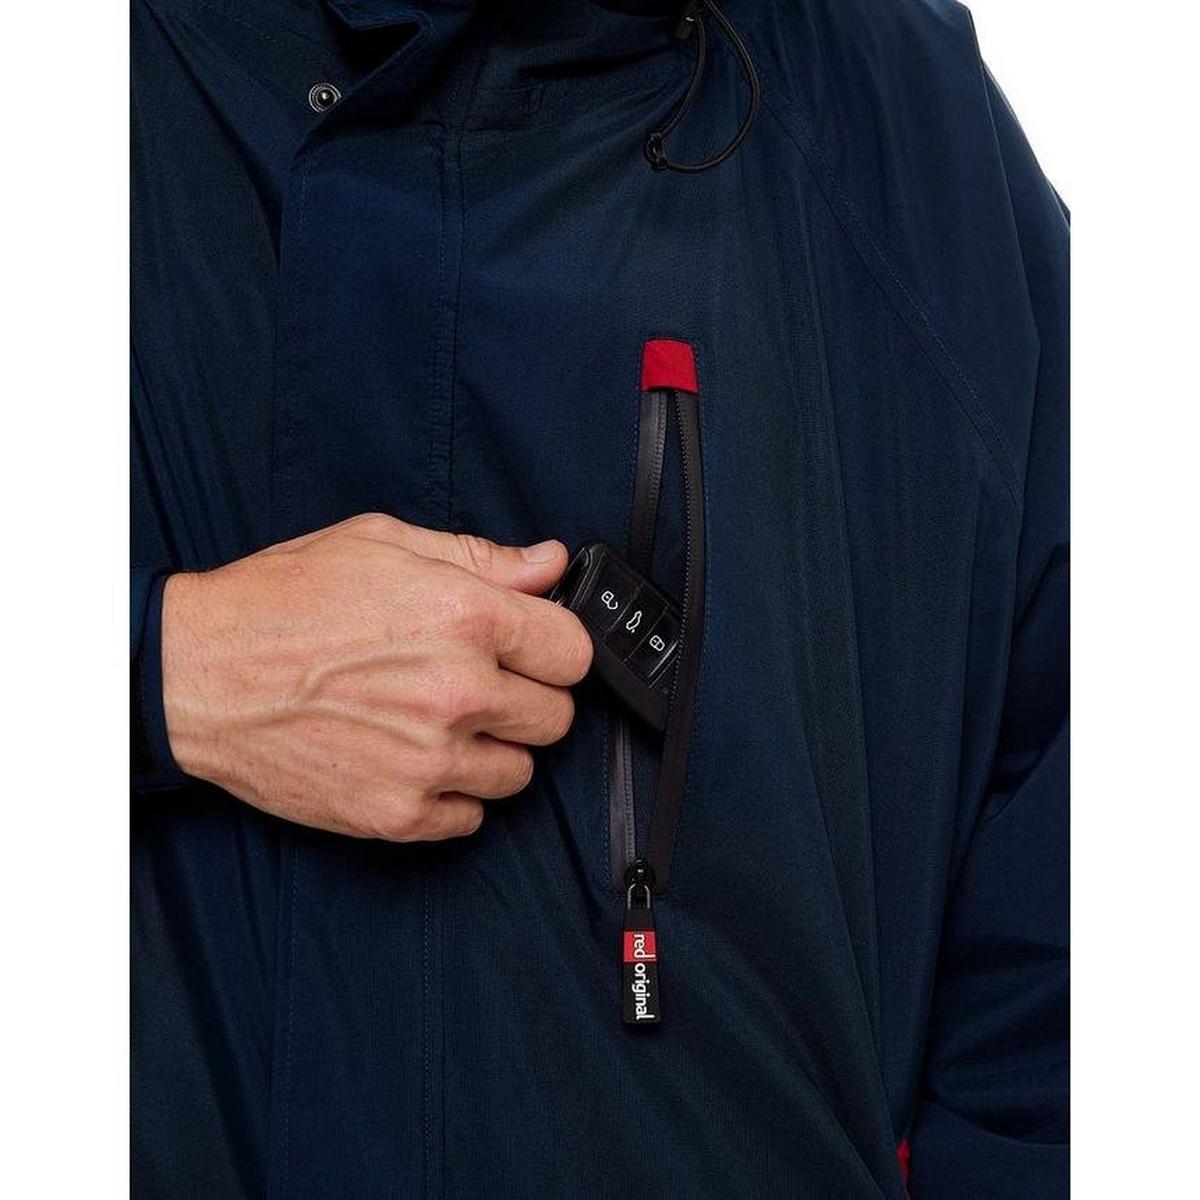 Red Paddle Pro Change Jacket 2.0 Long Sleeved - Navy